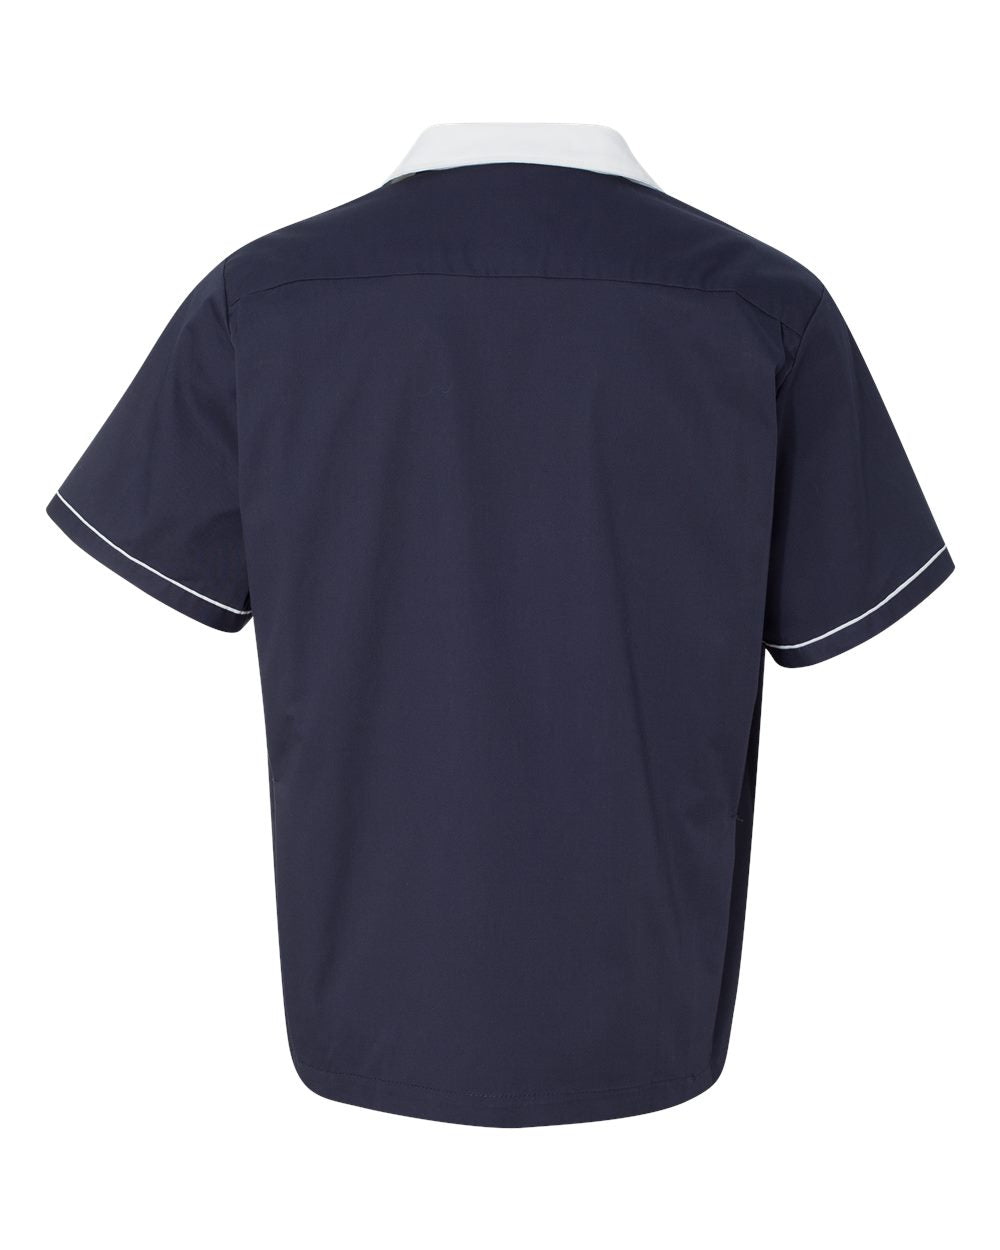 Hilton HP2244 Bowling Shirt Navy with White Trim Custom Text or Design